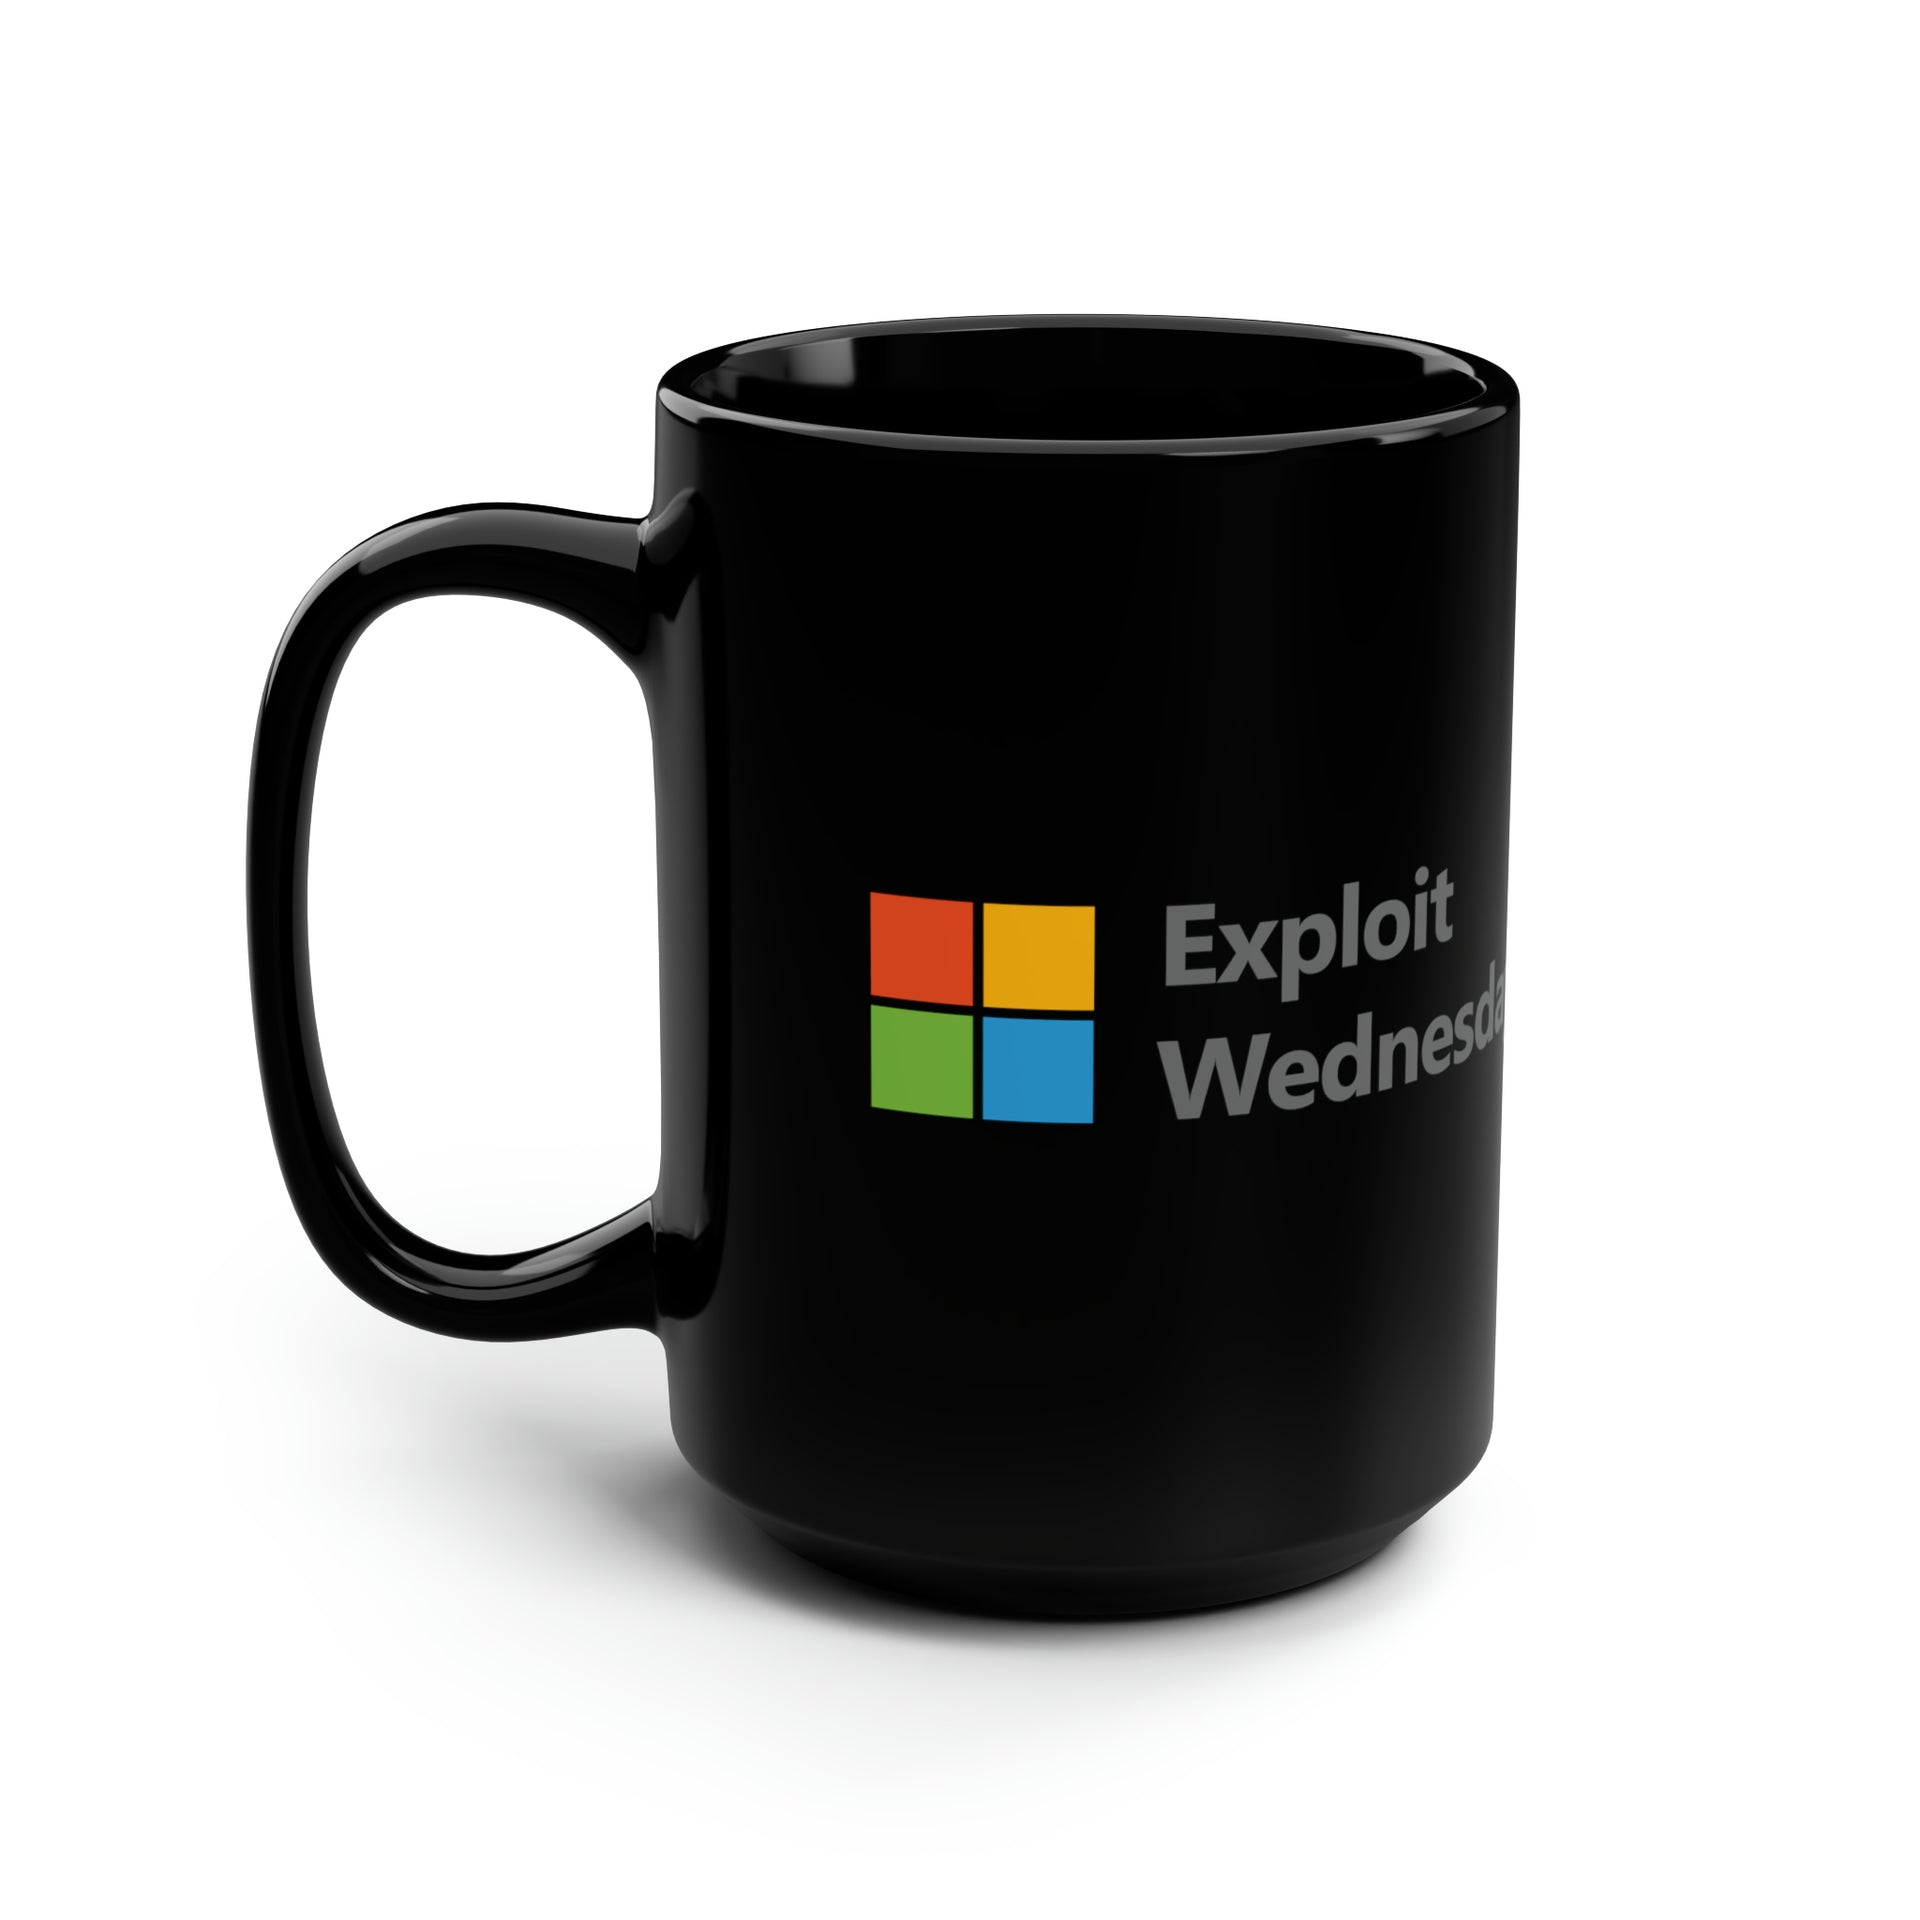 Exploit Wednesday (Black Mug 15oz)